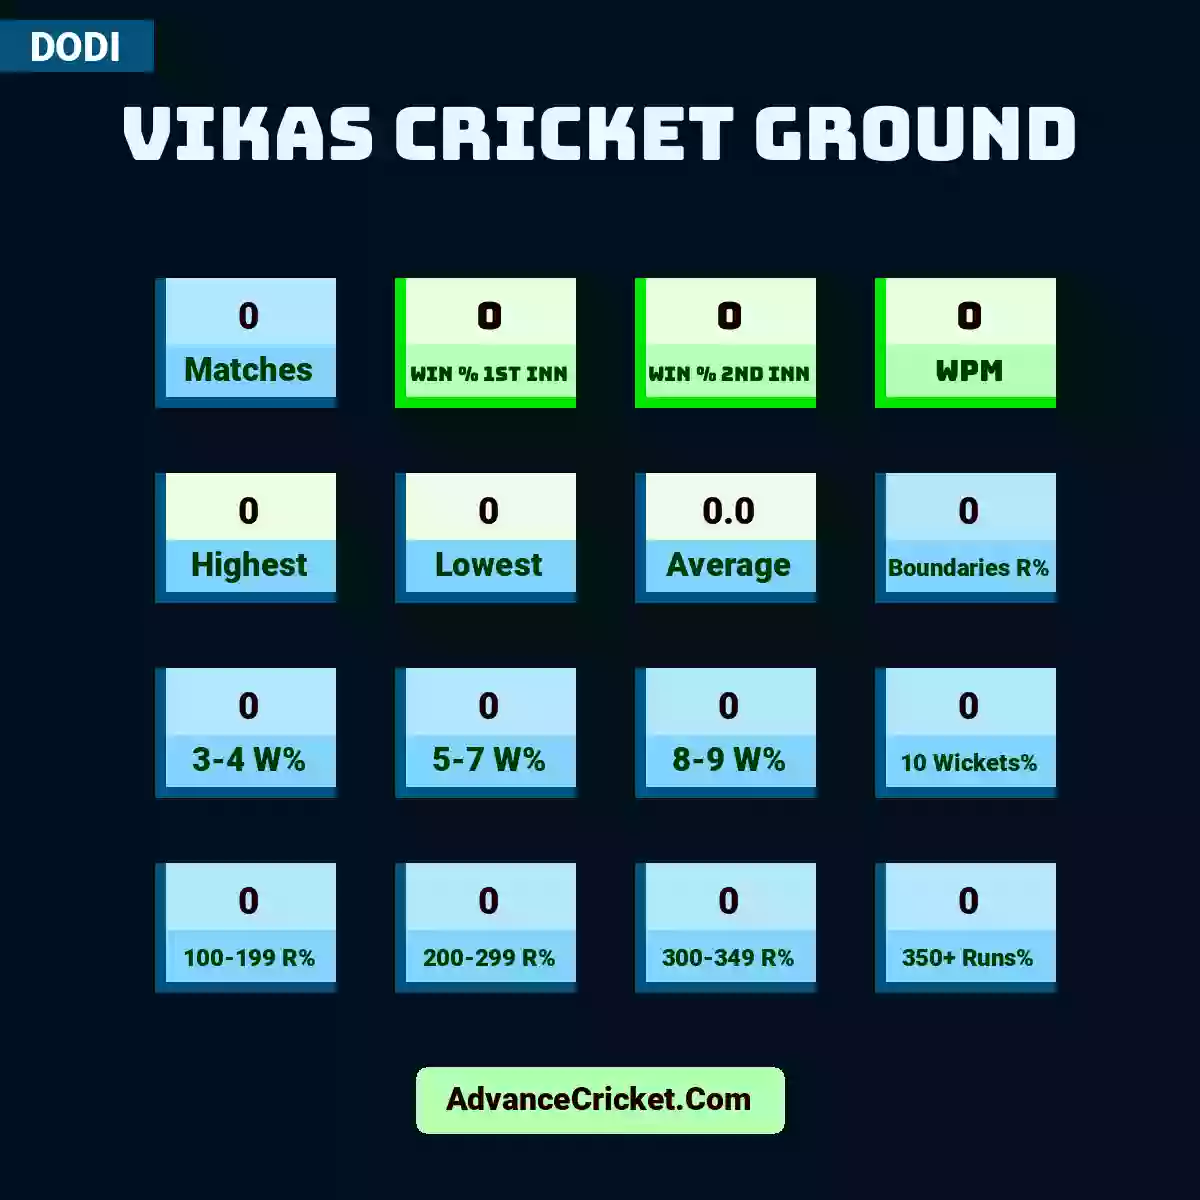 Image showing Vikas Cricket Ground with Matches: 0, Win % 1st Inn: 0, Win % 2nd Inn: 0, WPM: 0, Highest: 0, Lowest: 0, Average: 0.0, Boundaries R%: 0, 3-4 W%: 0, 5-7 W%: 0, 8-9 W%: 0, 10 Wickets%: 0, 100-199 R%: 0, 200-299 R%: 0, 300-349 R%: 0, 350+ Runs%: 0.